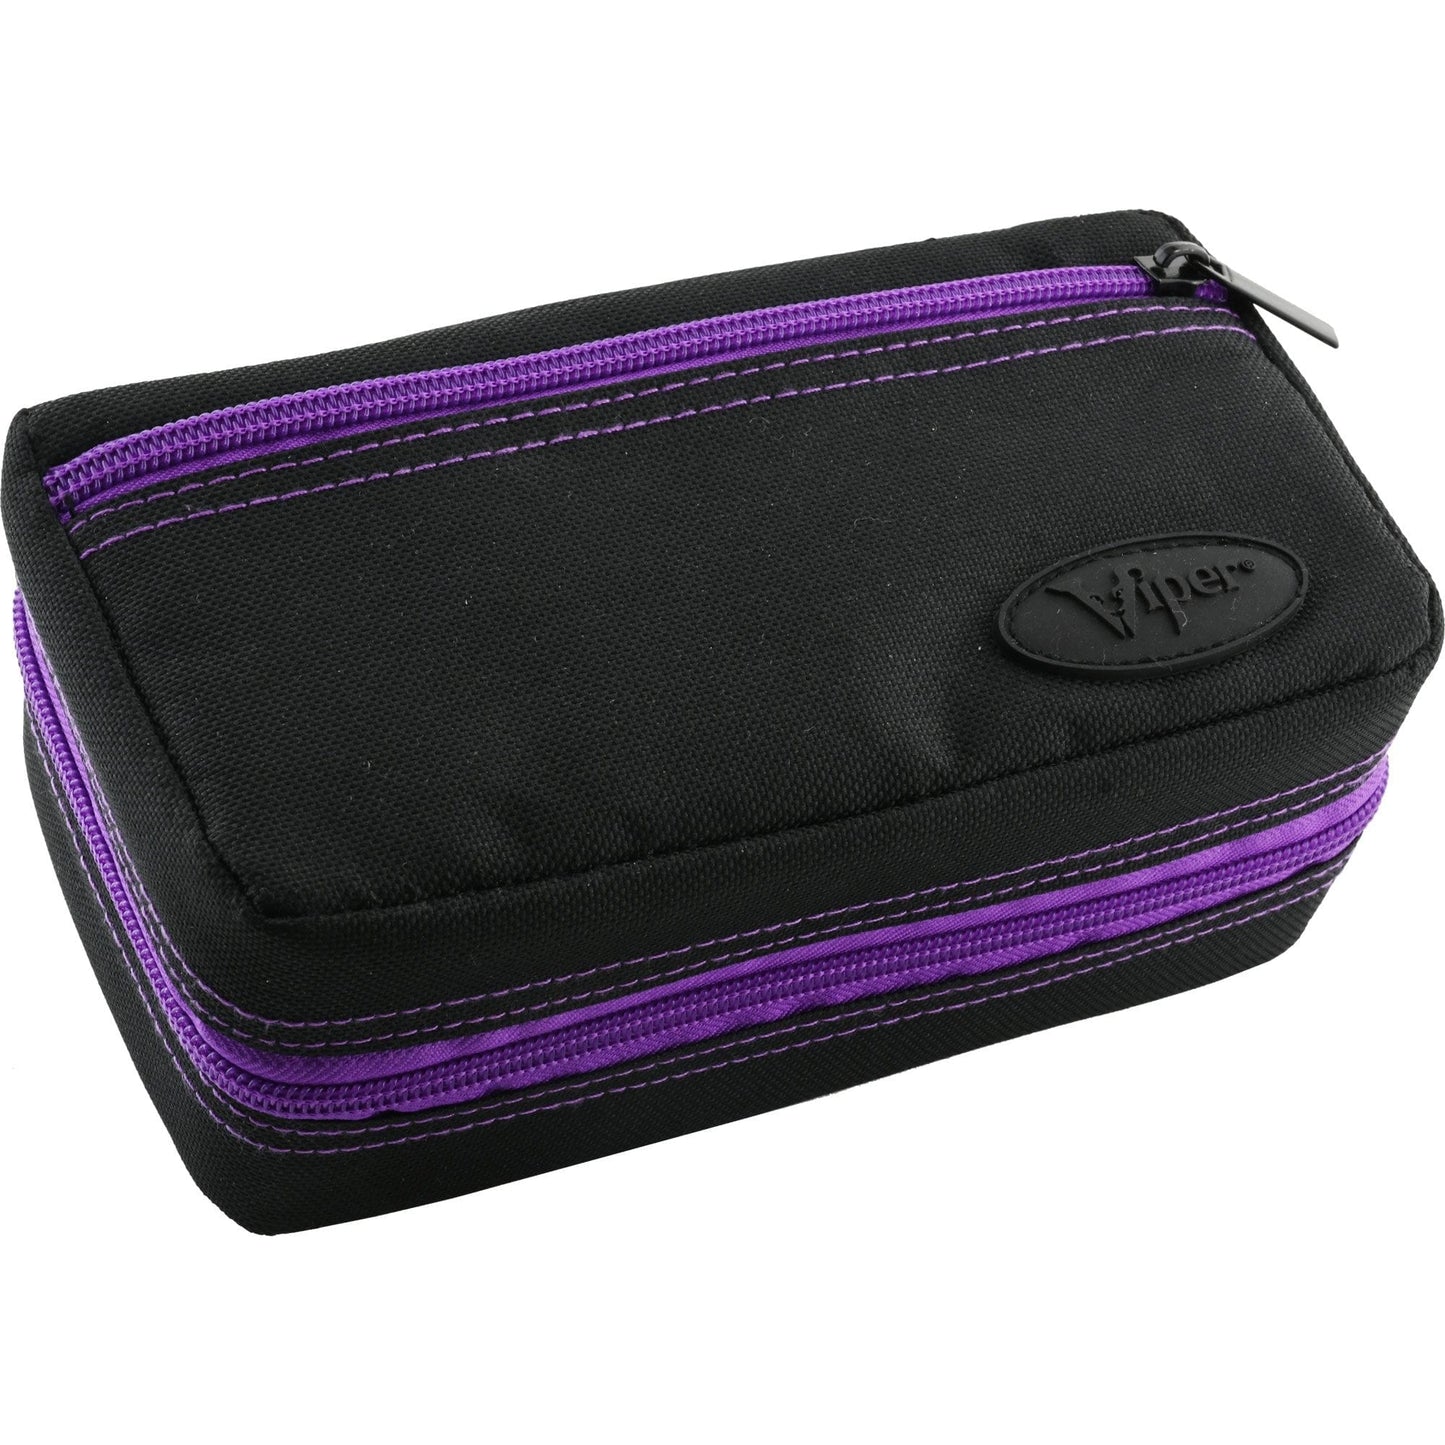 Viper Plazma Pro Dart Case - Extremely Tough & Durable Purple